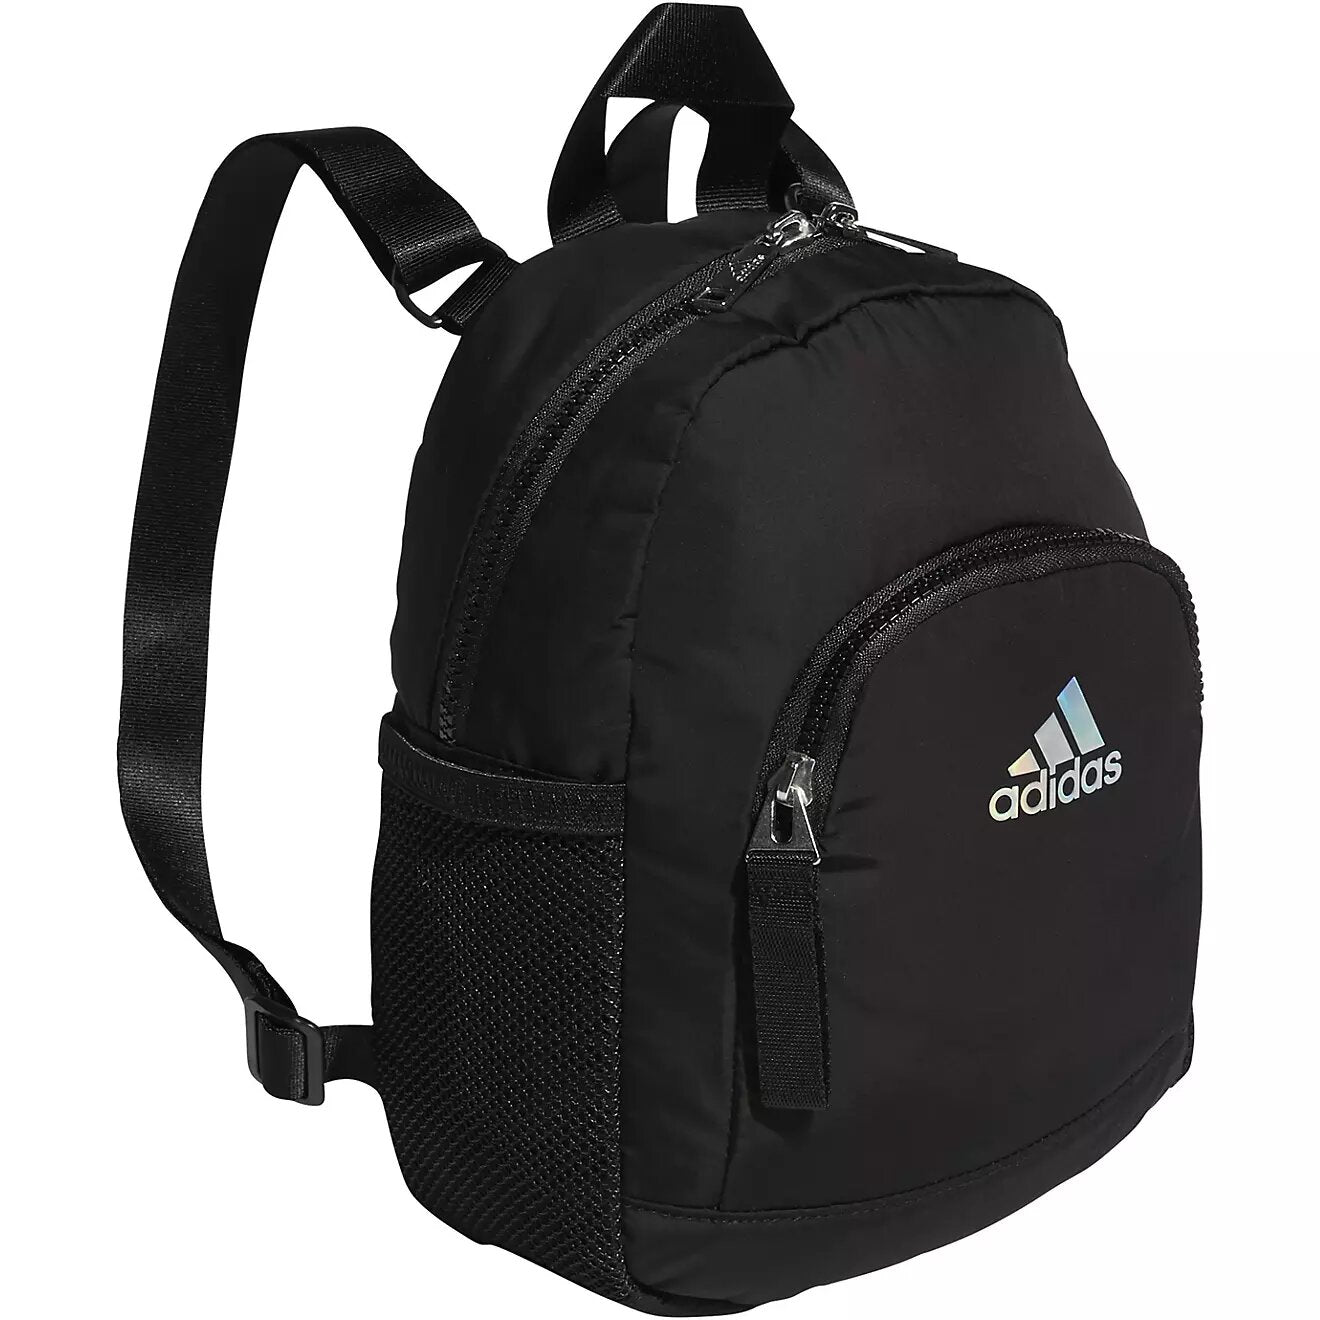 linear 3 mini backpack adidas